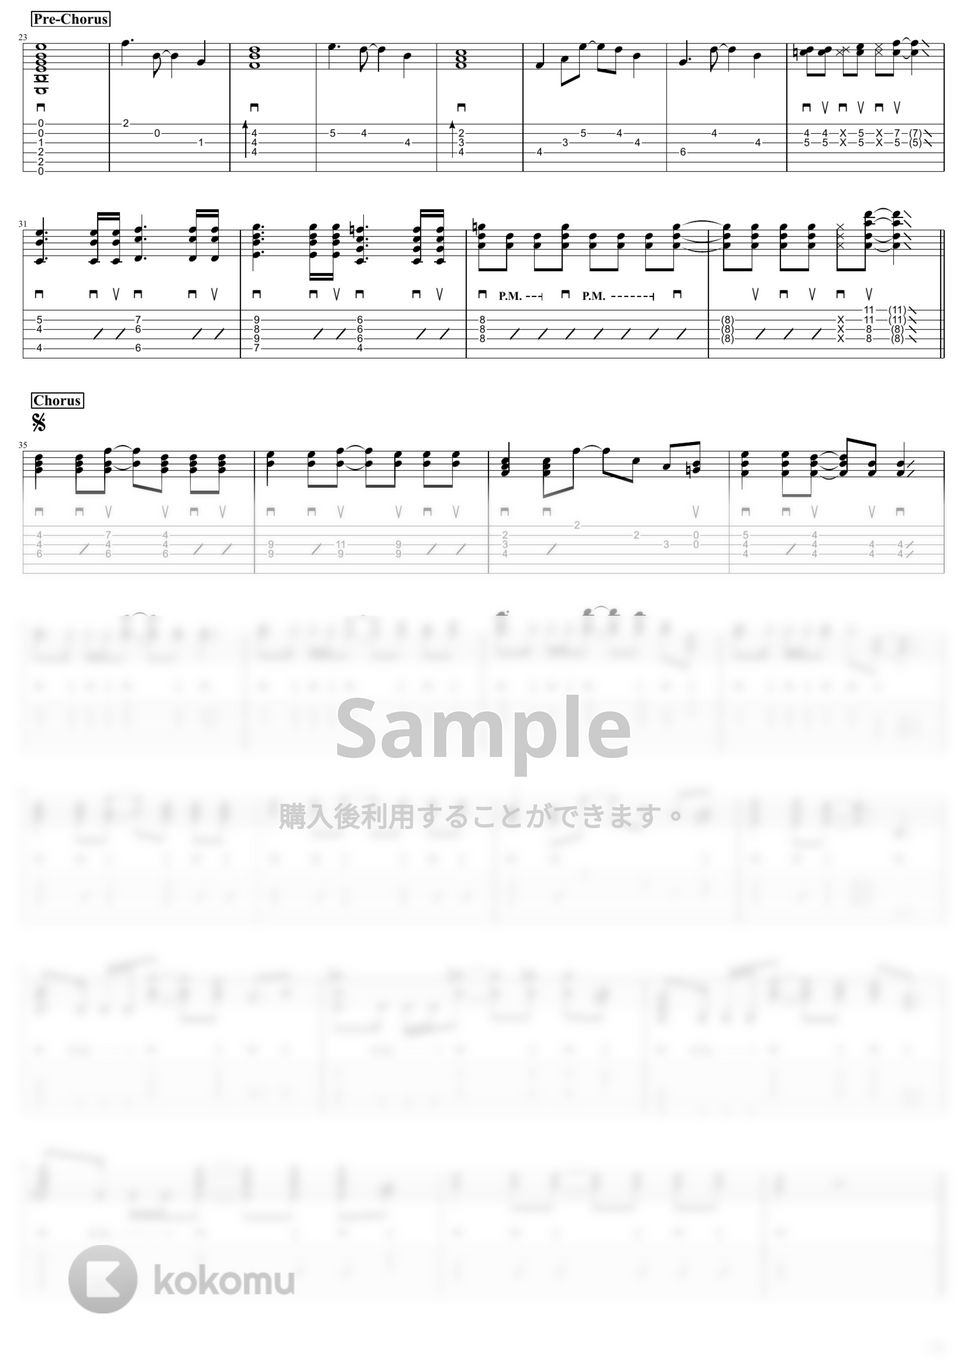 Aimer - 残響散歌 by ChakiP